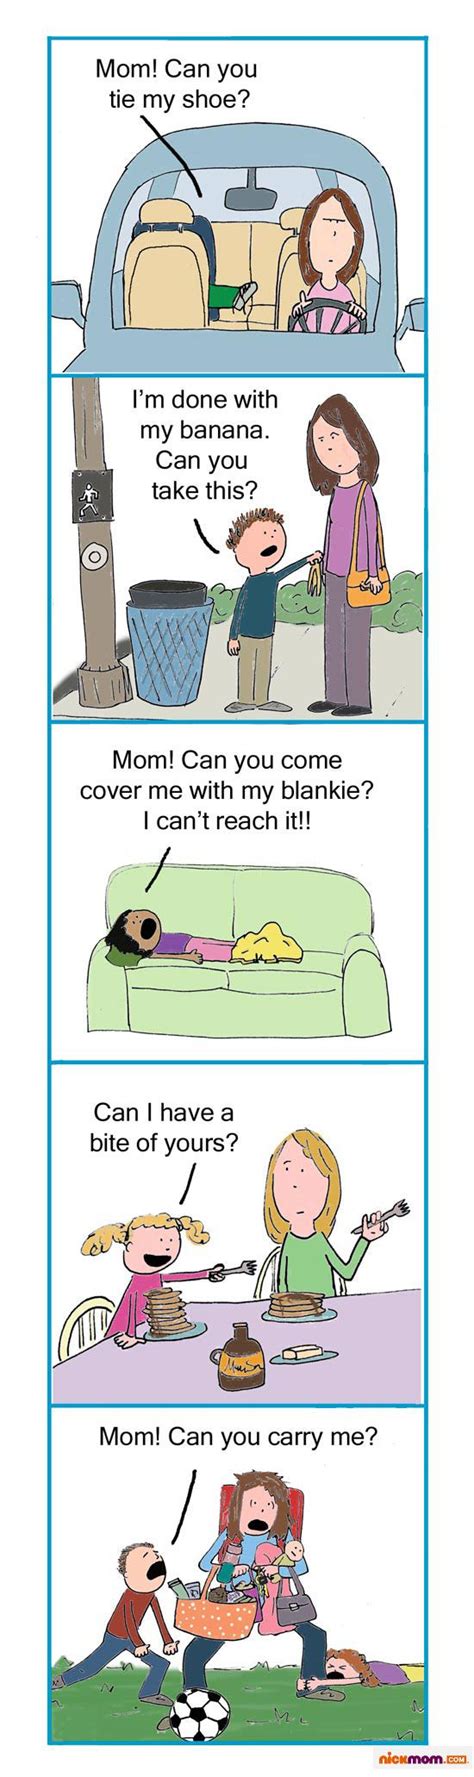 31 best funny mom jokes images on pinterest funny stuff ha ha and funny mom jokes